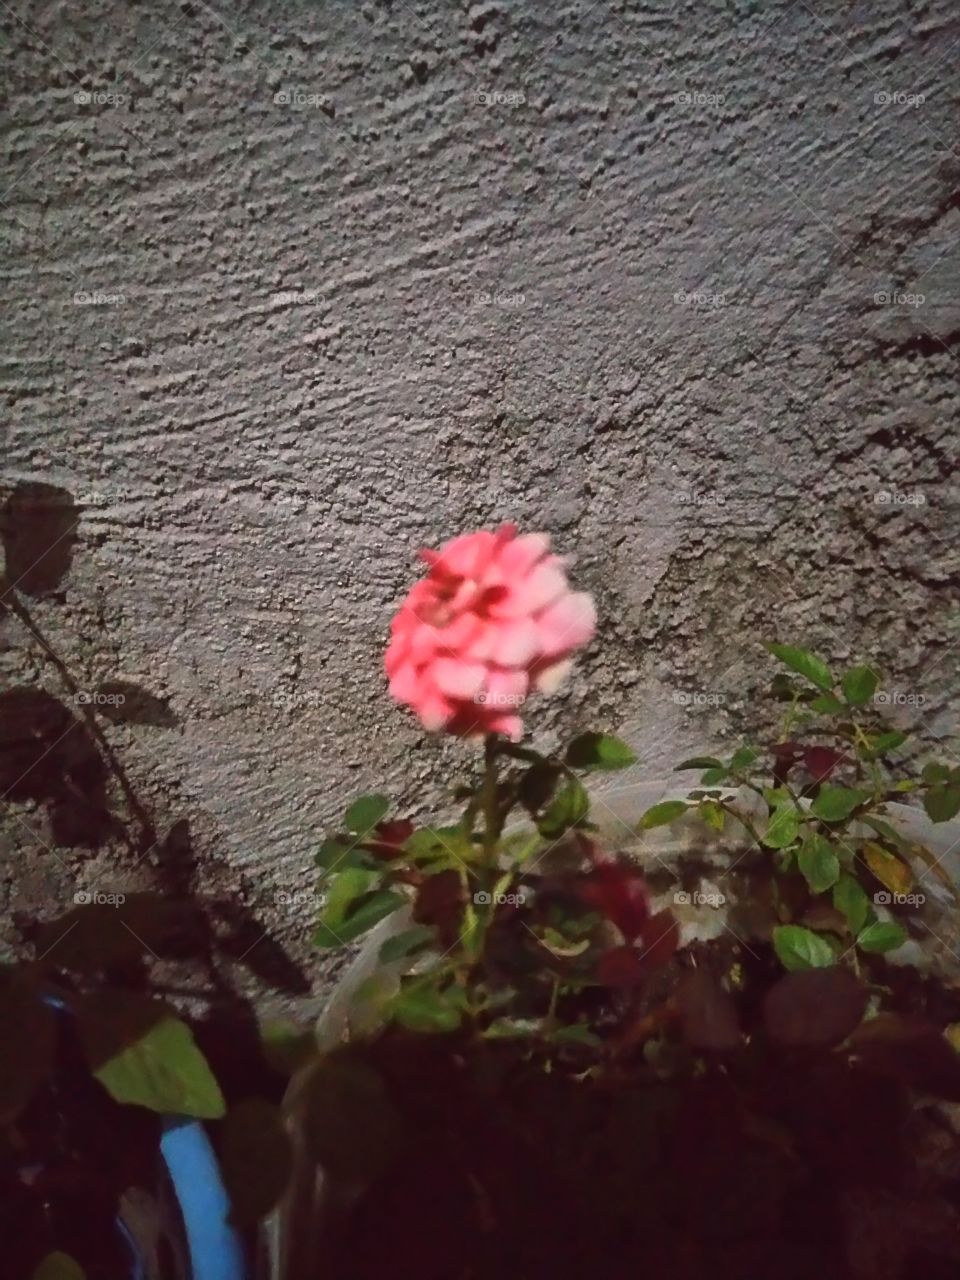 flower at night 🌃